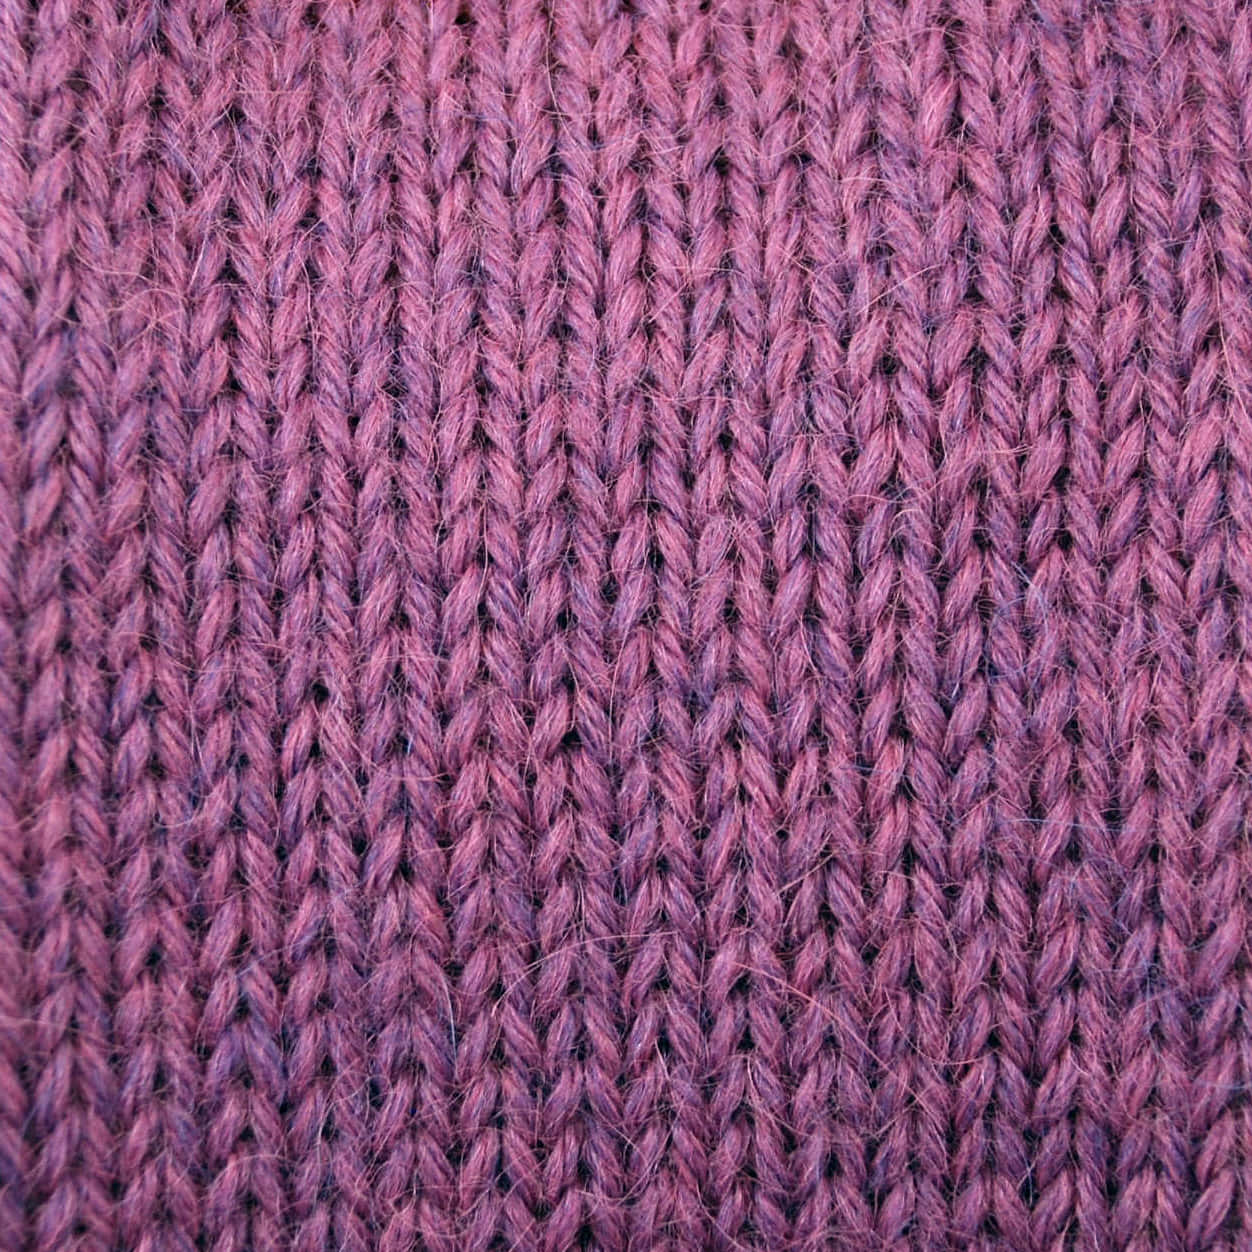 Purple Patterned Yarn For Knitting Wallpaper